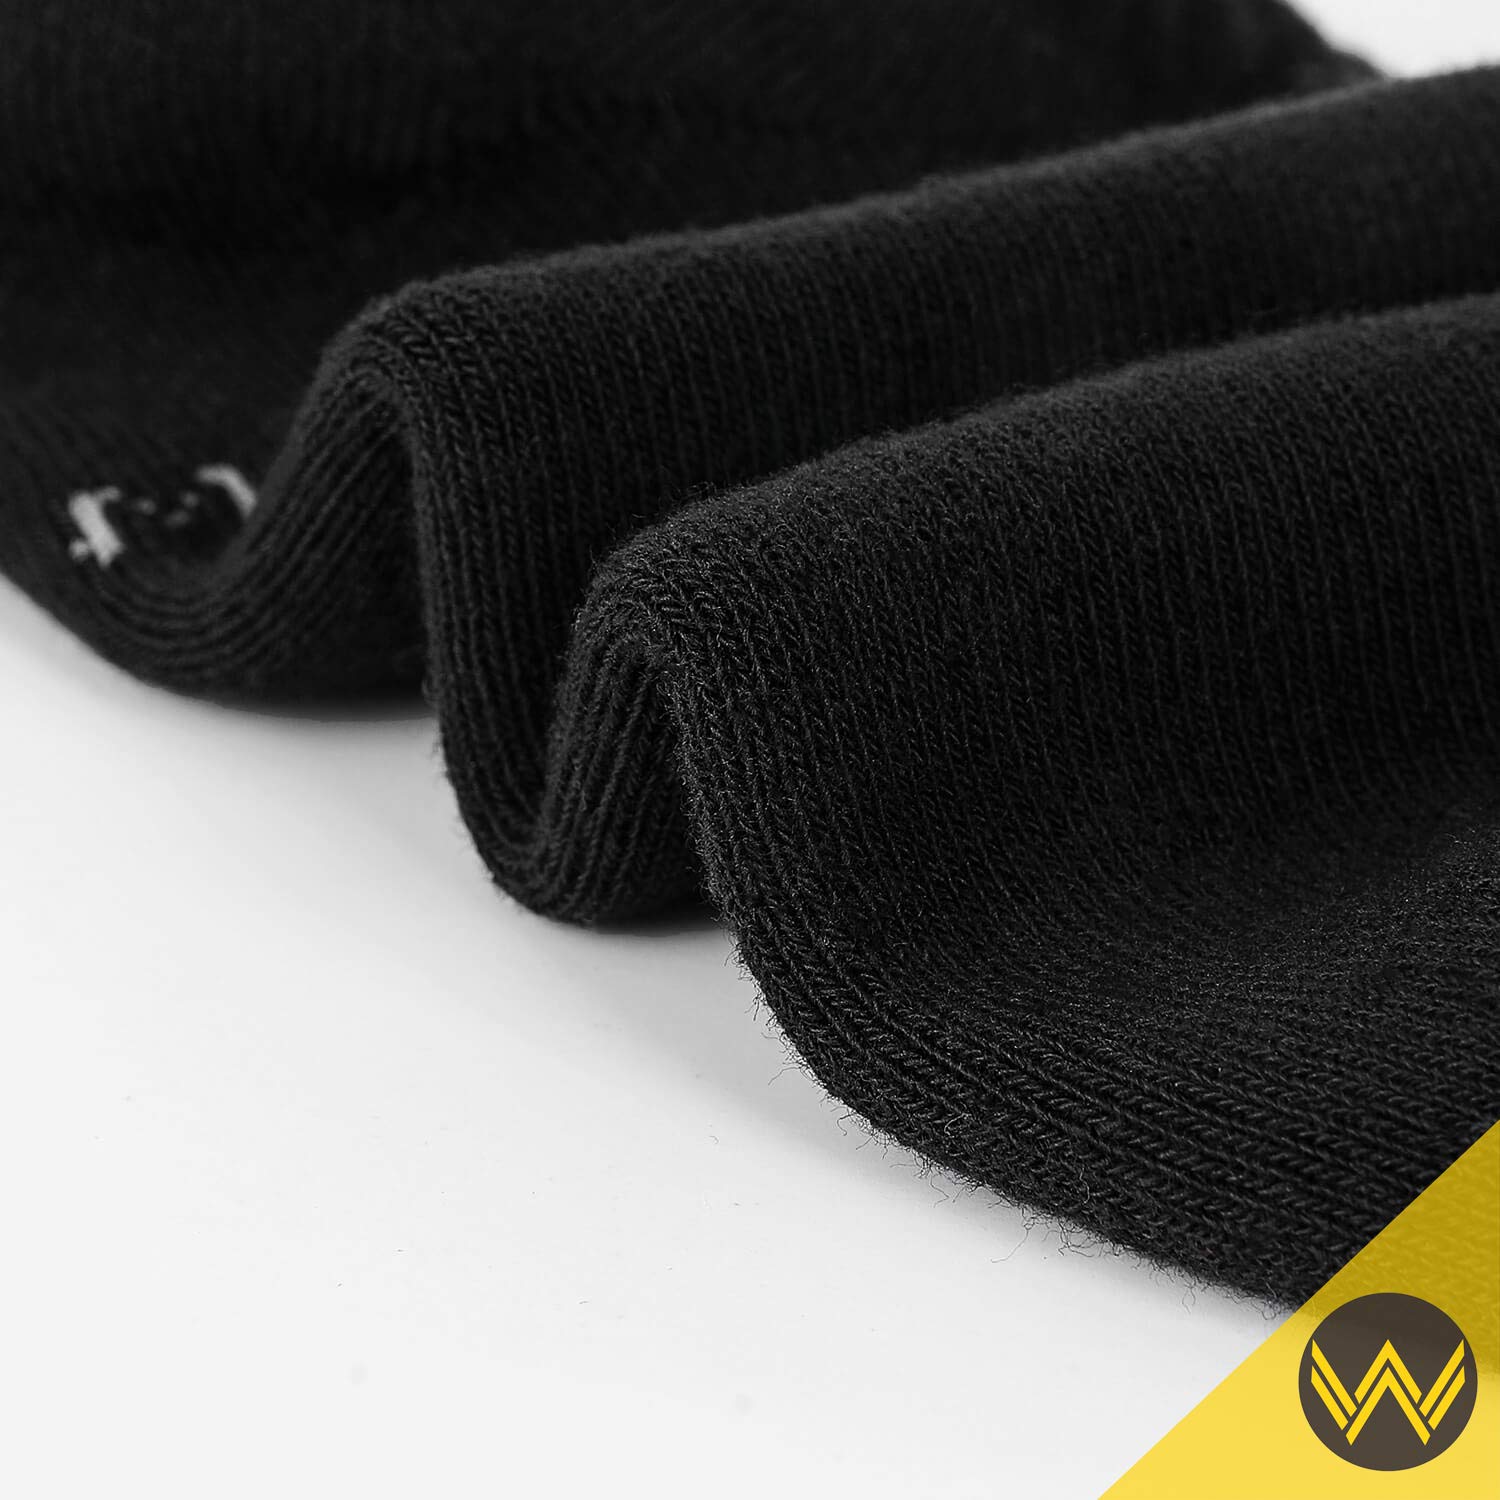 WANDER Men's Athletic Low Cut Socks 8 Pairs Thick Cushion Durable Socks for Men Ventilating Cotton socks 9-12 (8 Pair Black)